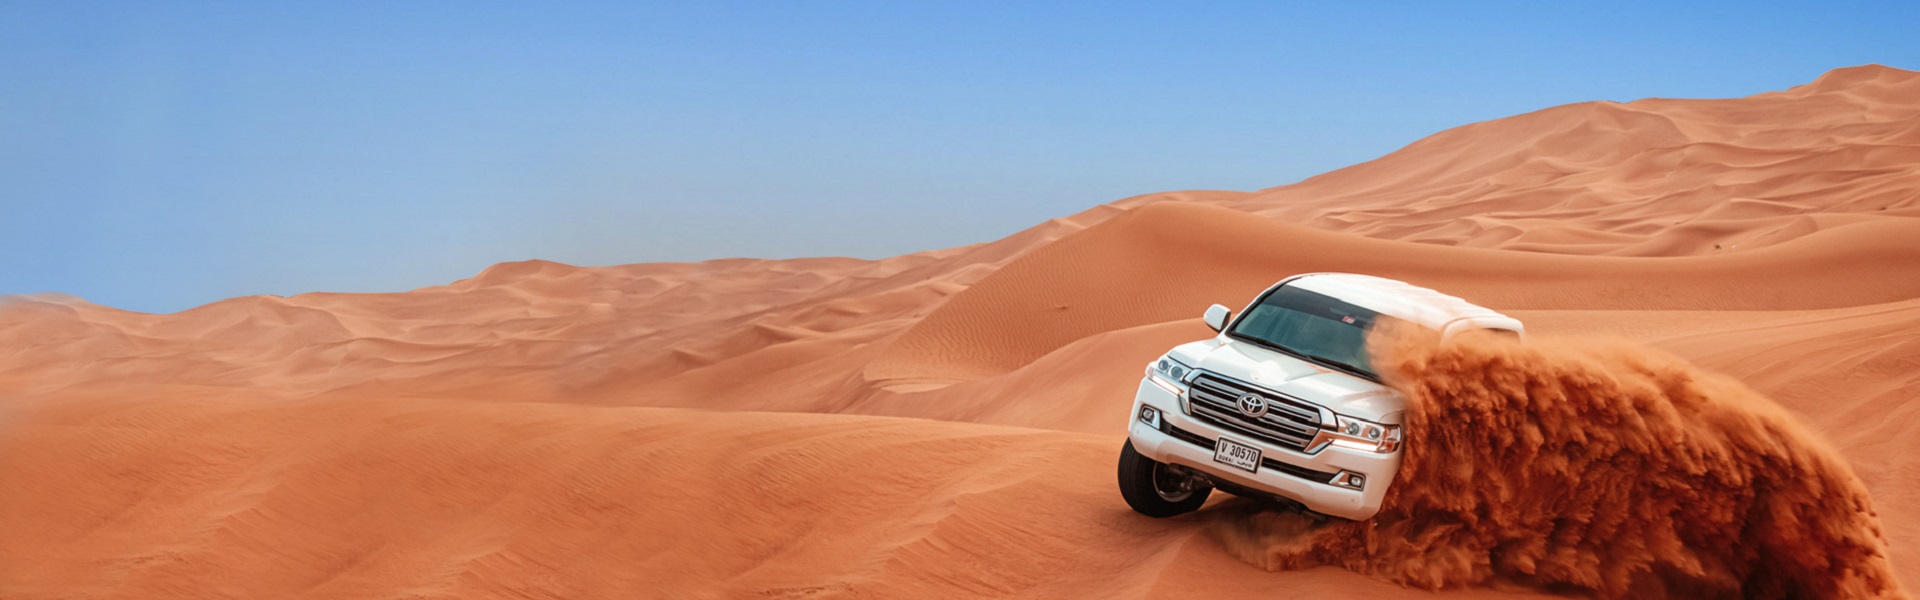 Renault delovi | Desert safari in Dubai